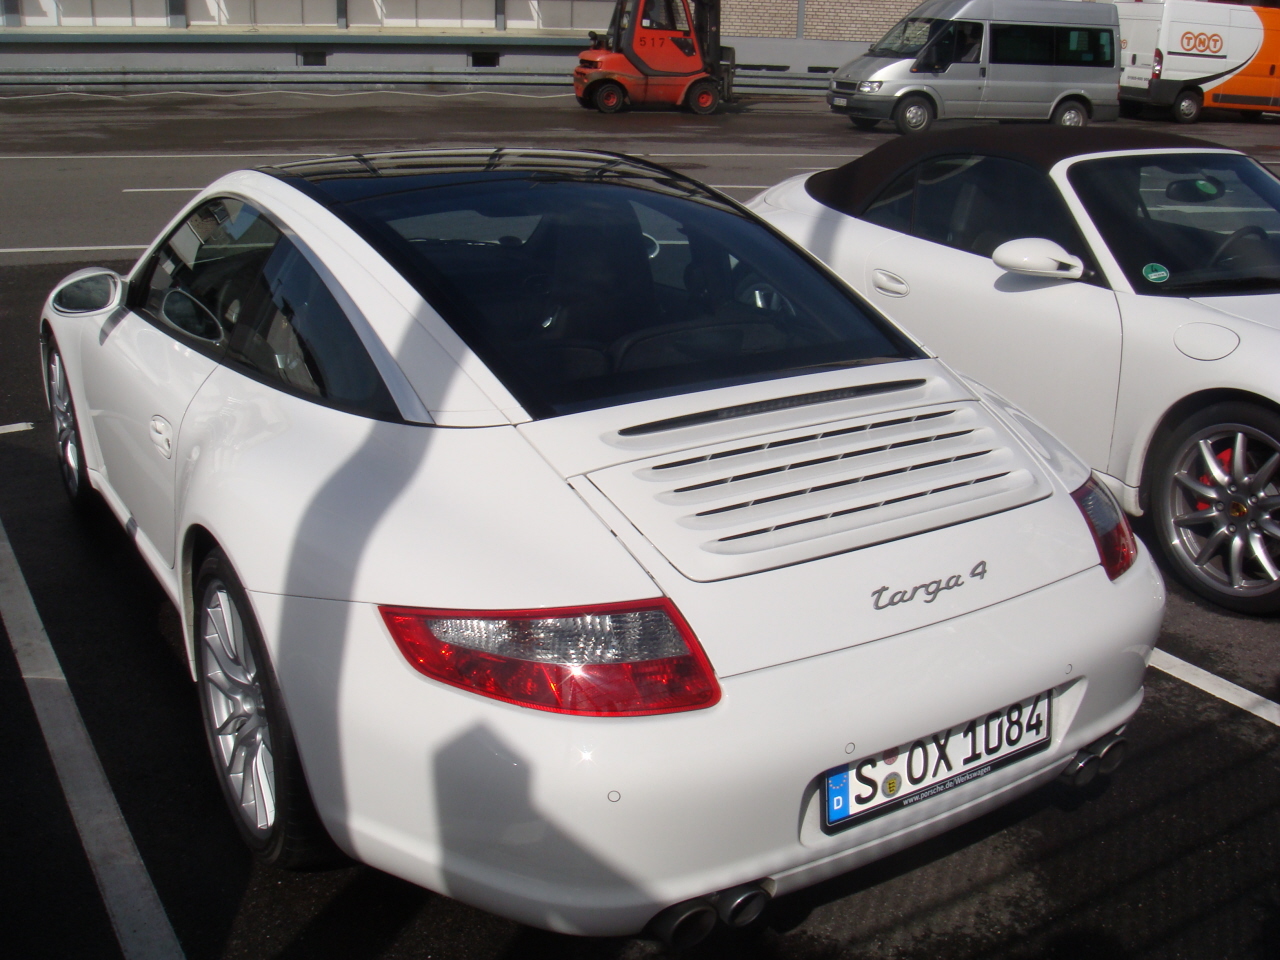 Visita Rapida a Porsche / Fast Visit to Porsche-targa401.JPG